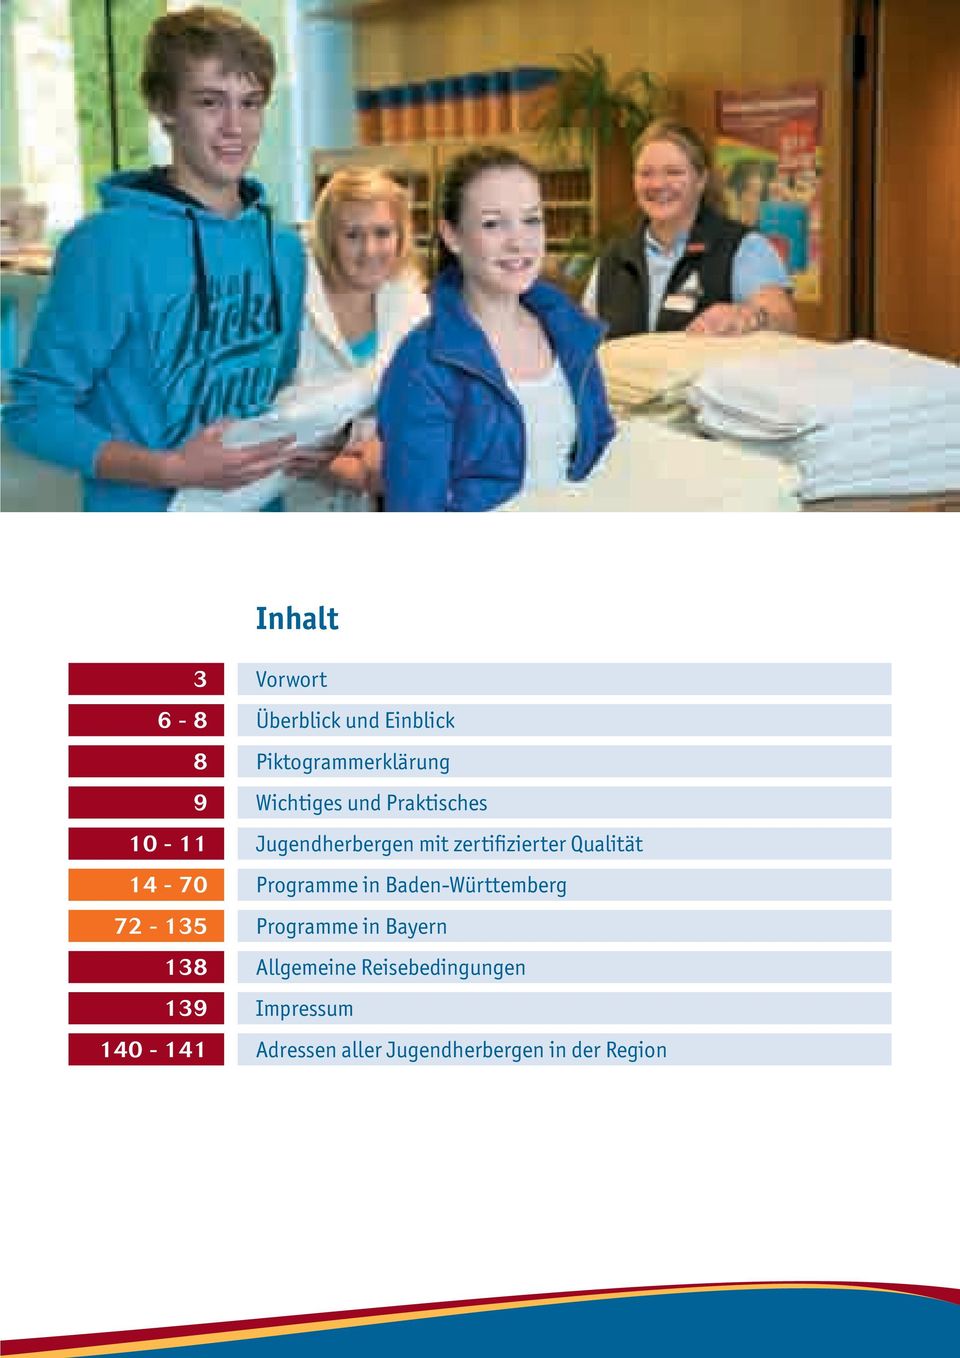 Jugendherbergen mit zertifizierter Qualität e in Baden-Württemberg e in